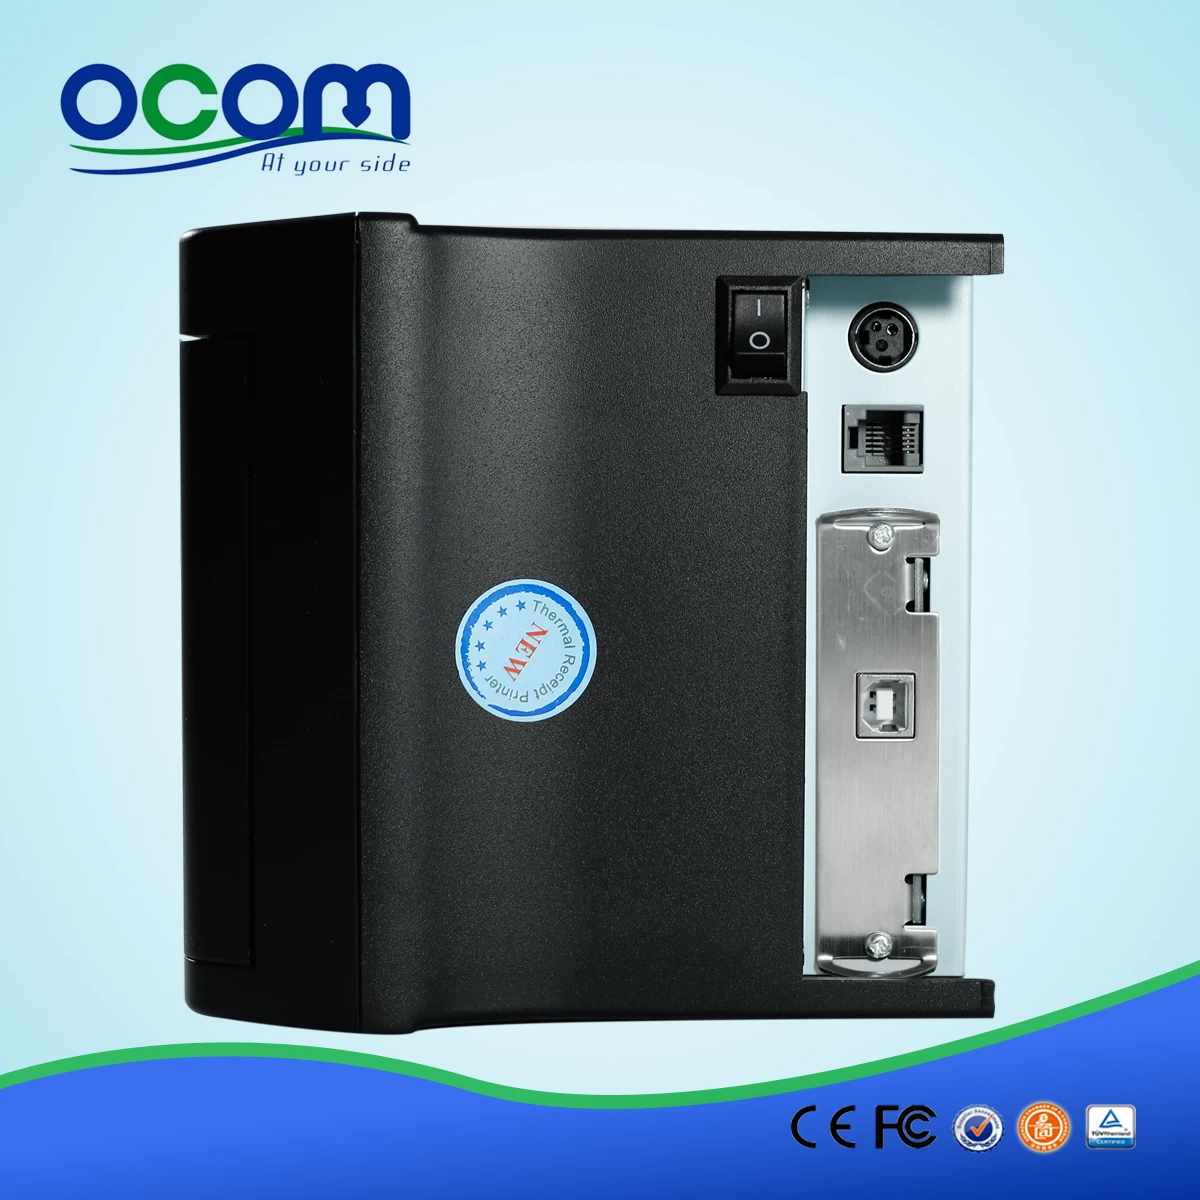 OCPP-802: supply pos thermal printer module, 80mm thermal receipt printer